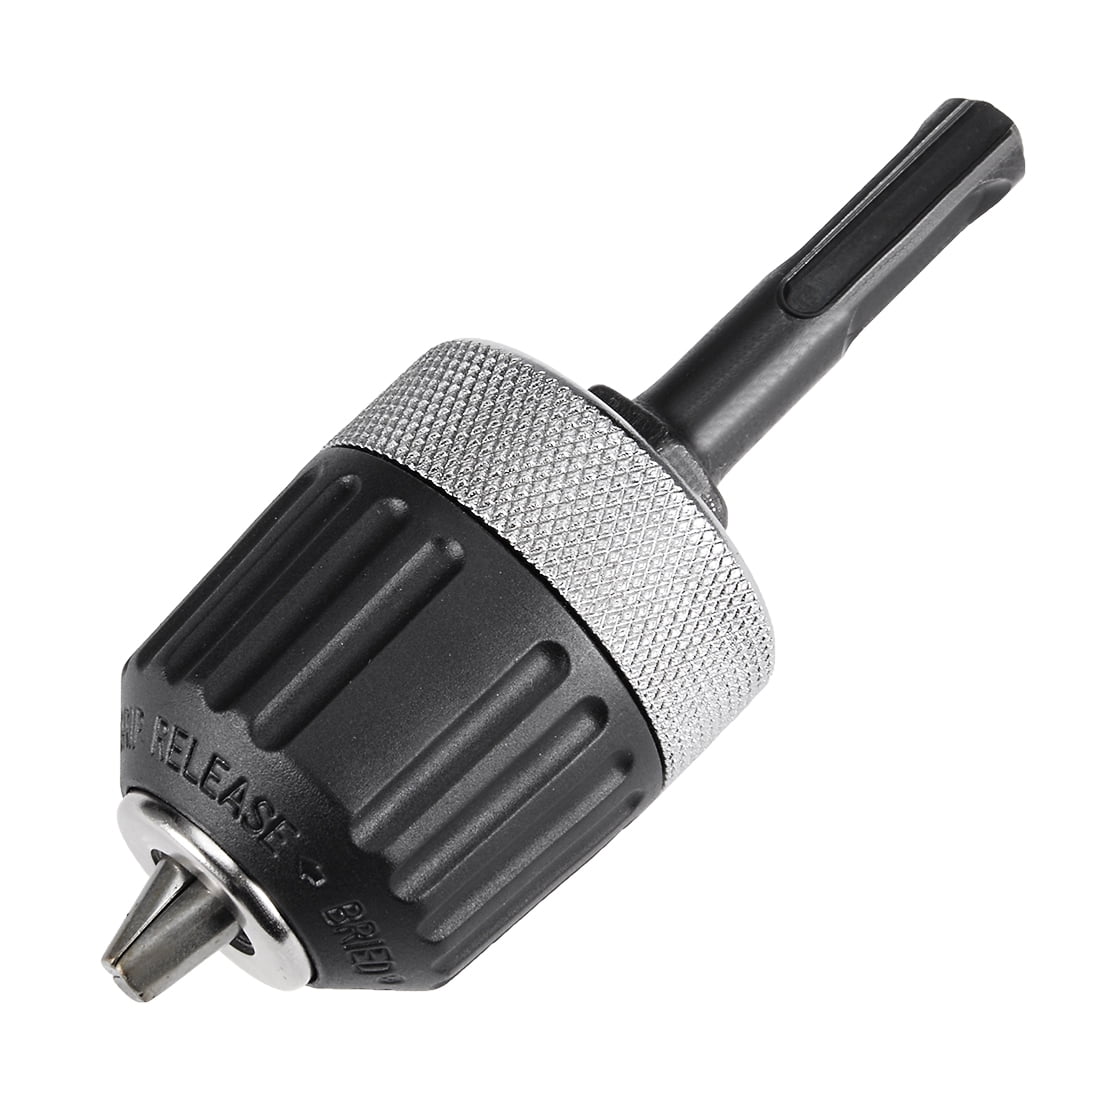 Keyless Drill Bit Chuck Adapter 1/4" Hex Shank For Impact Driver 0.8-10mm 